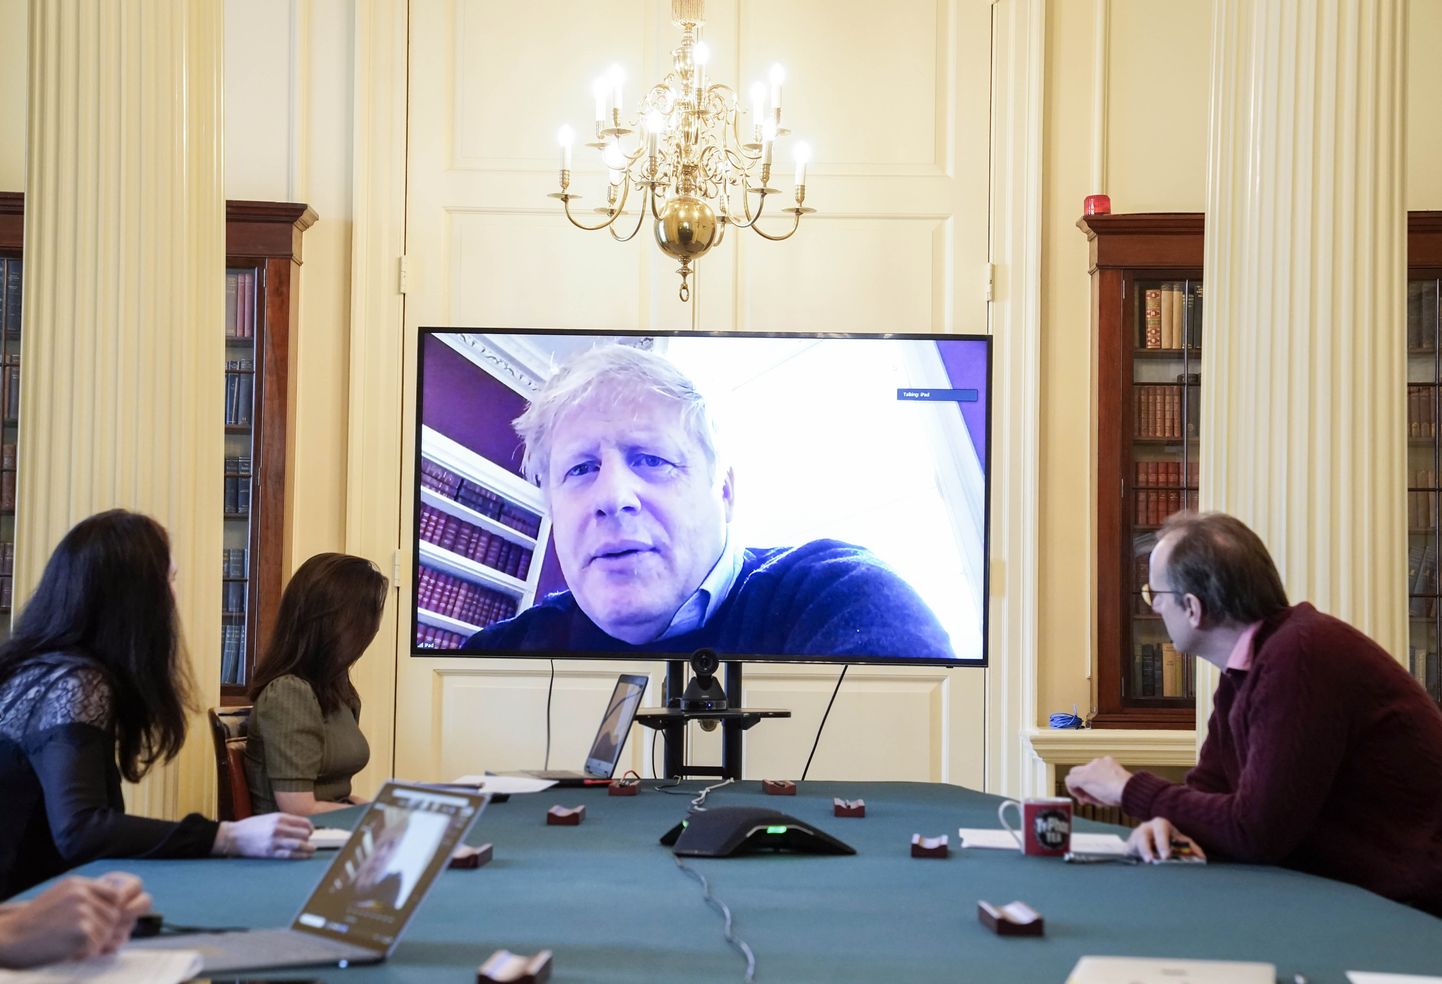 Briti peaminister Boris Johnson  on Inglismaa kriiskomisjoni atrutelul video vahendusel. 29.03.2020.